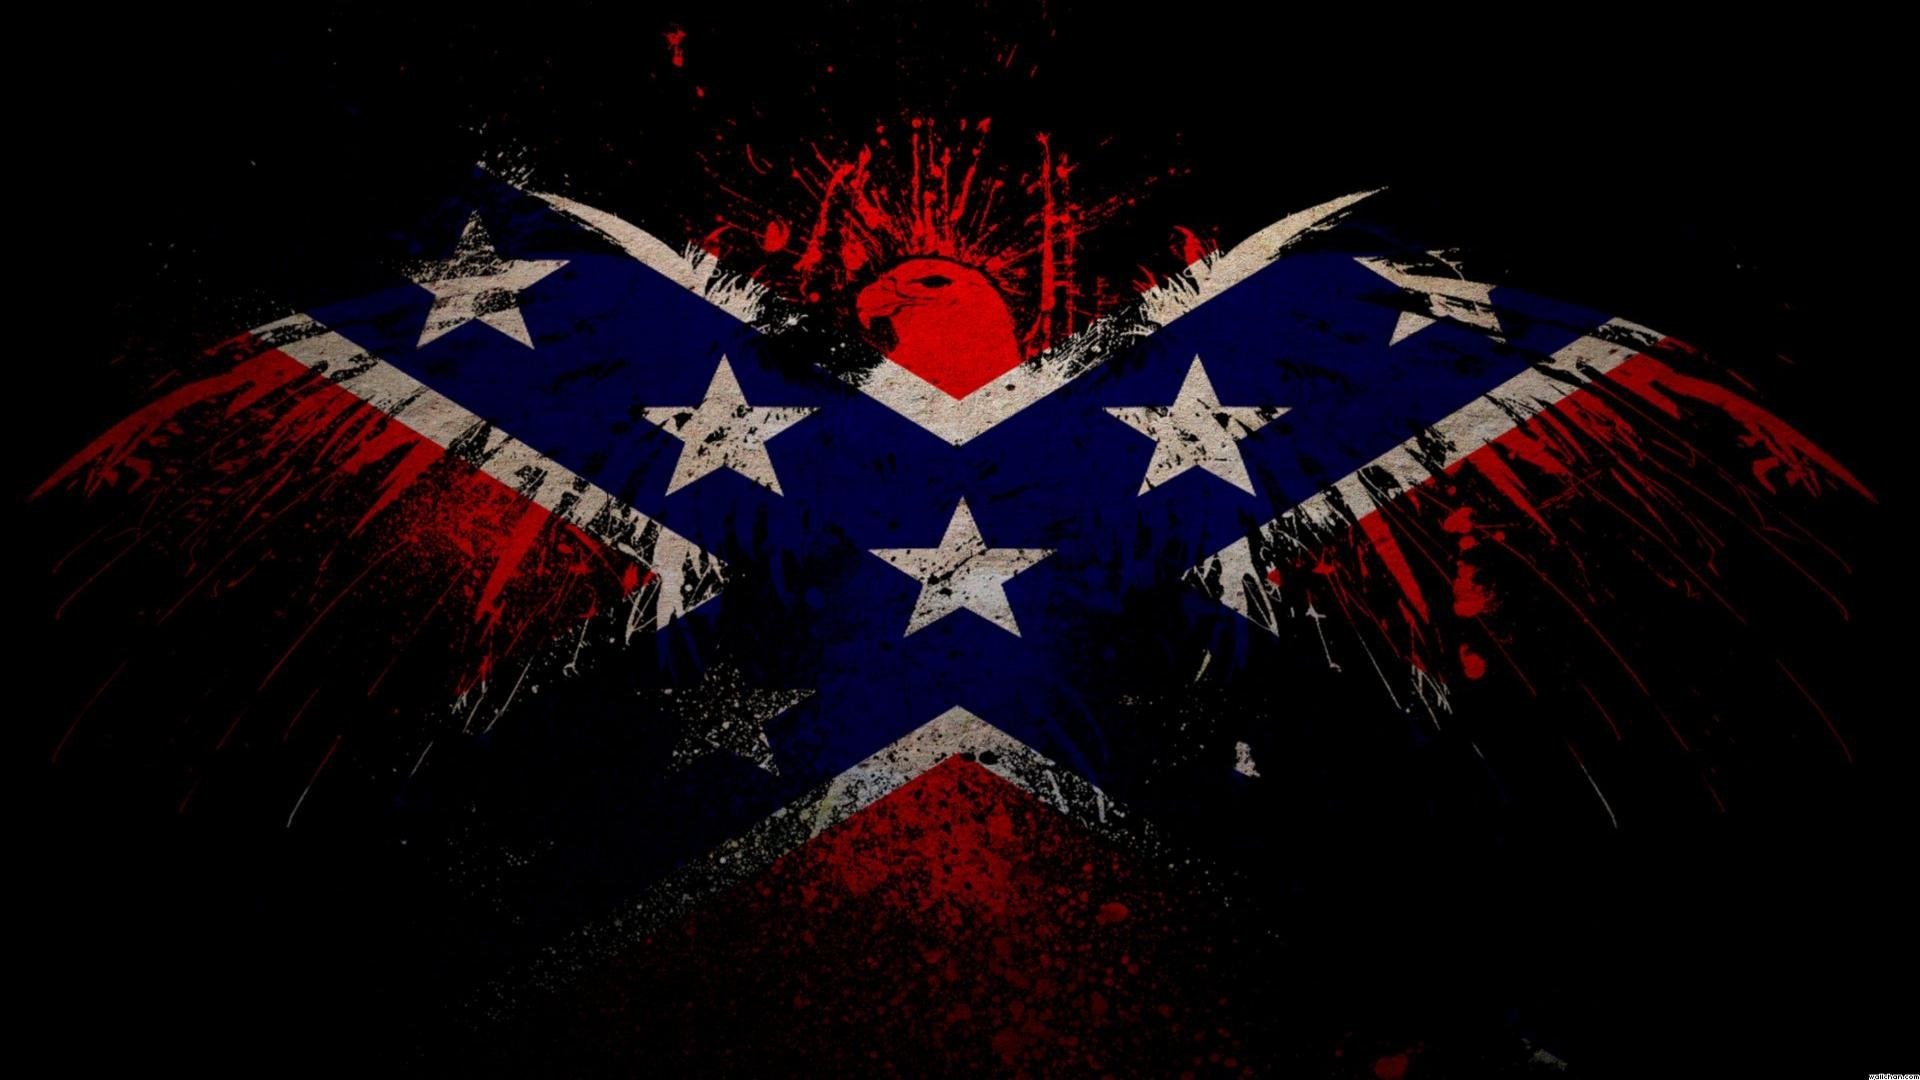 CONFEDERATE flag usa america united states csa civil war rebel dixie military poster wallpaper 742415 WallpaperUP